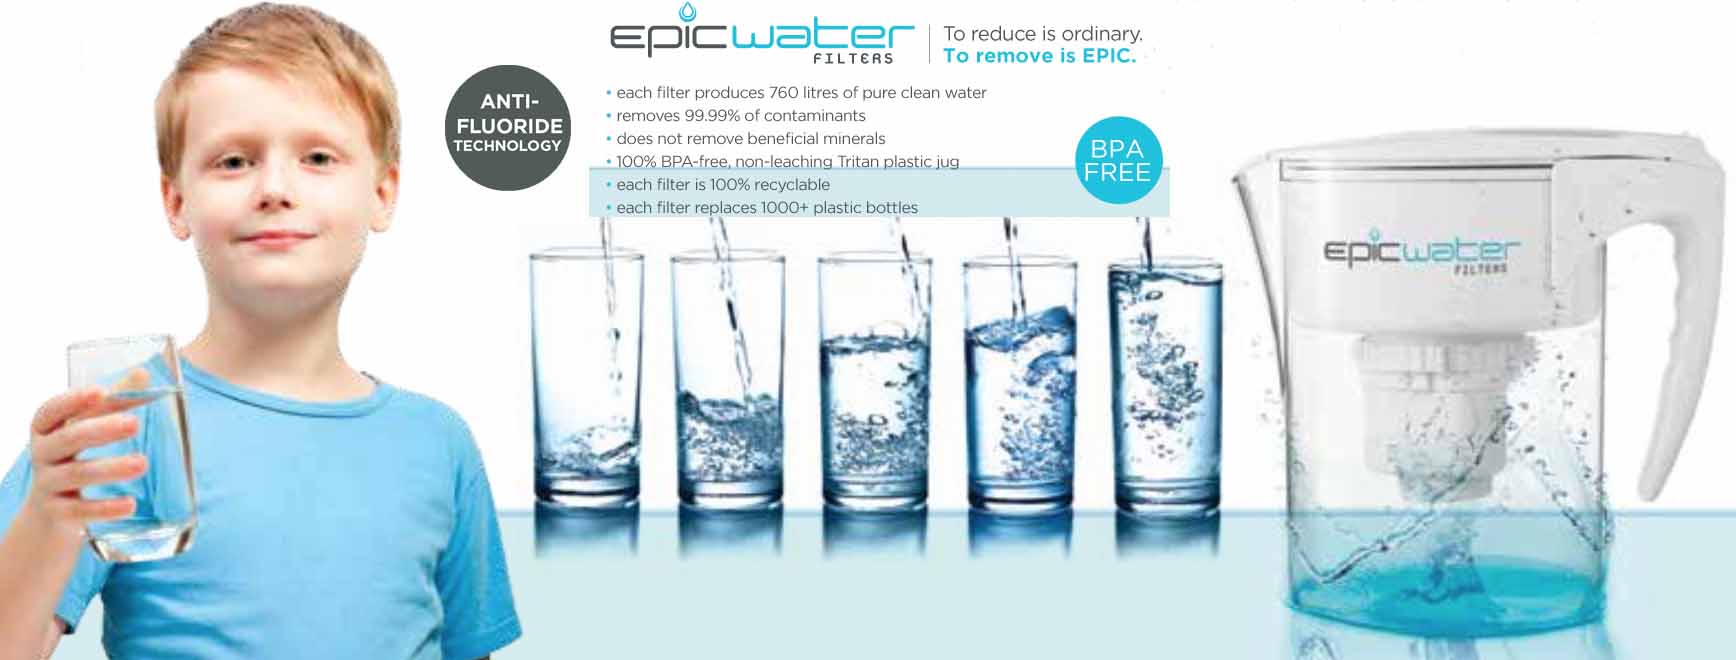 epic water filter